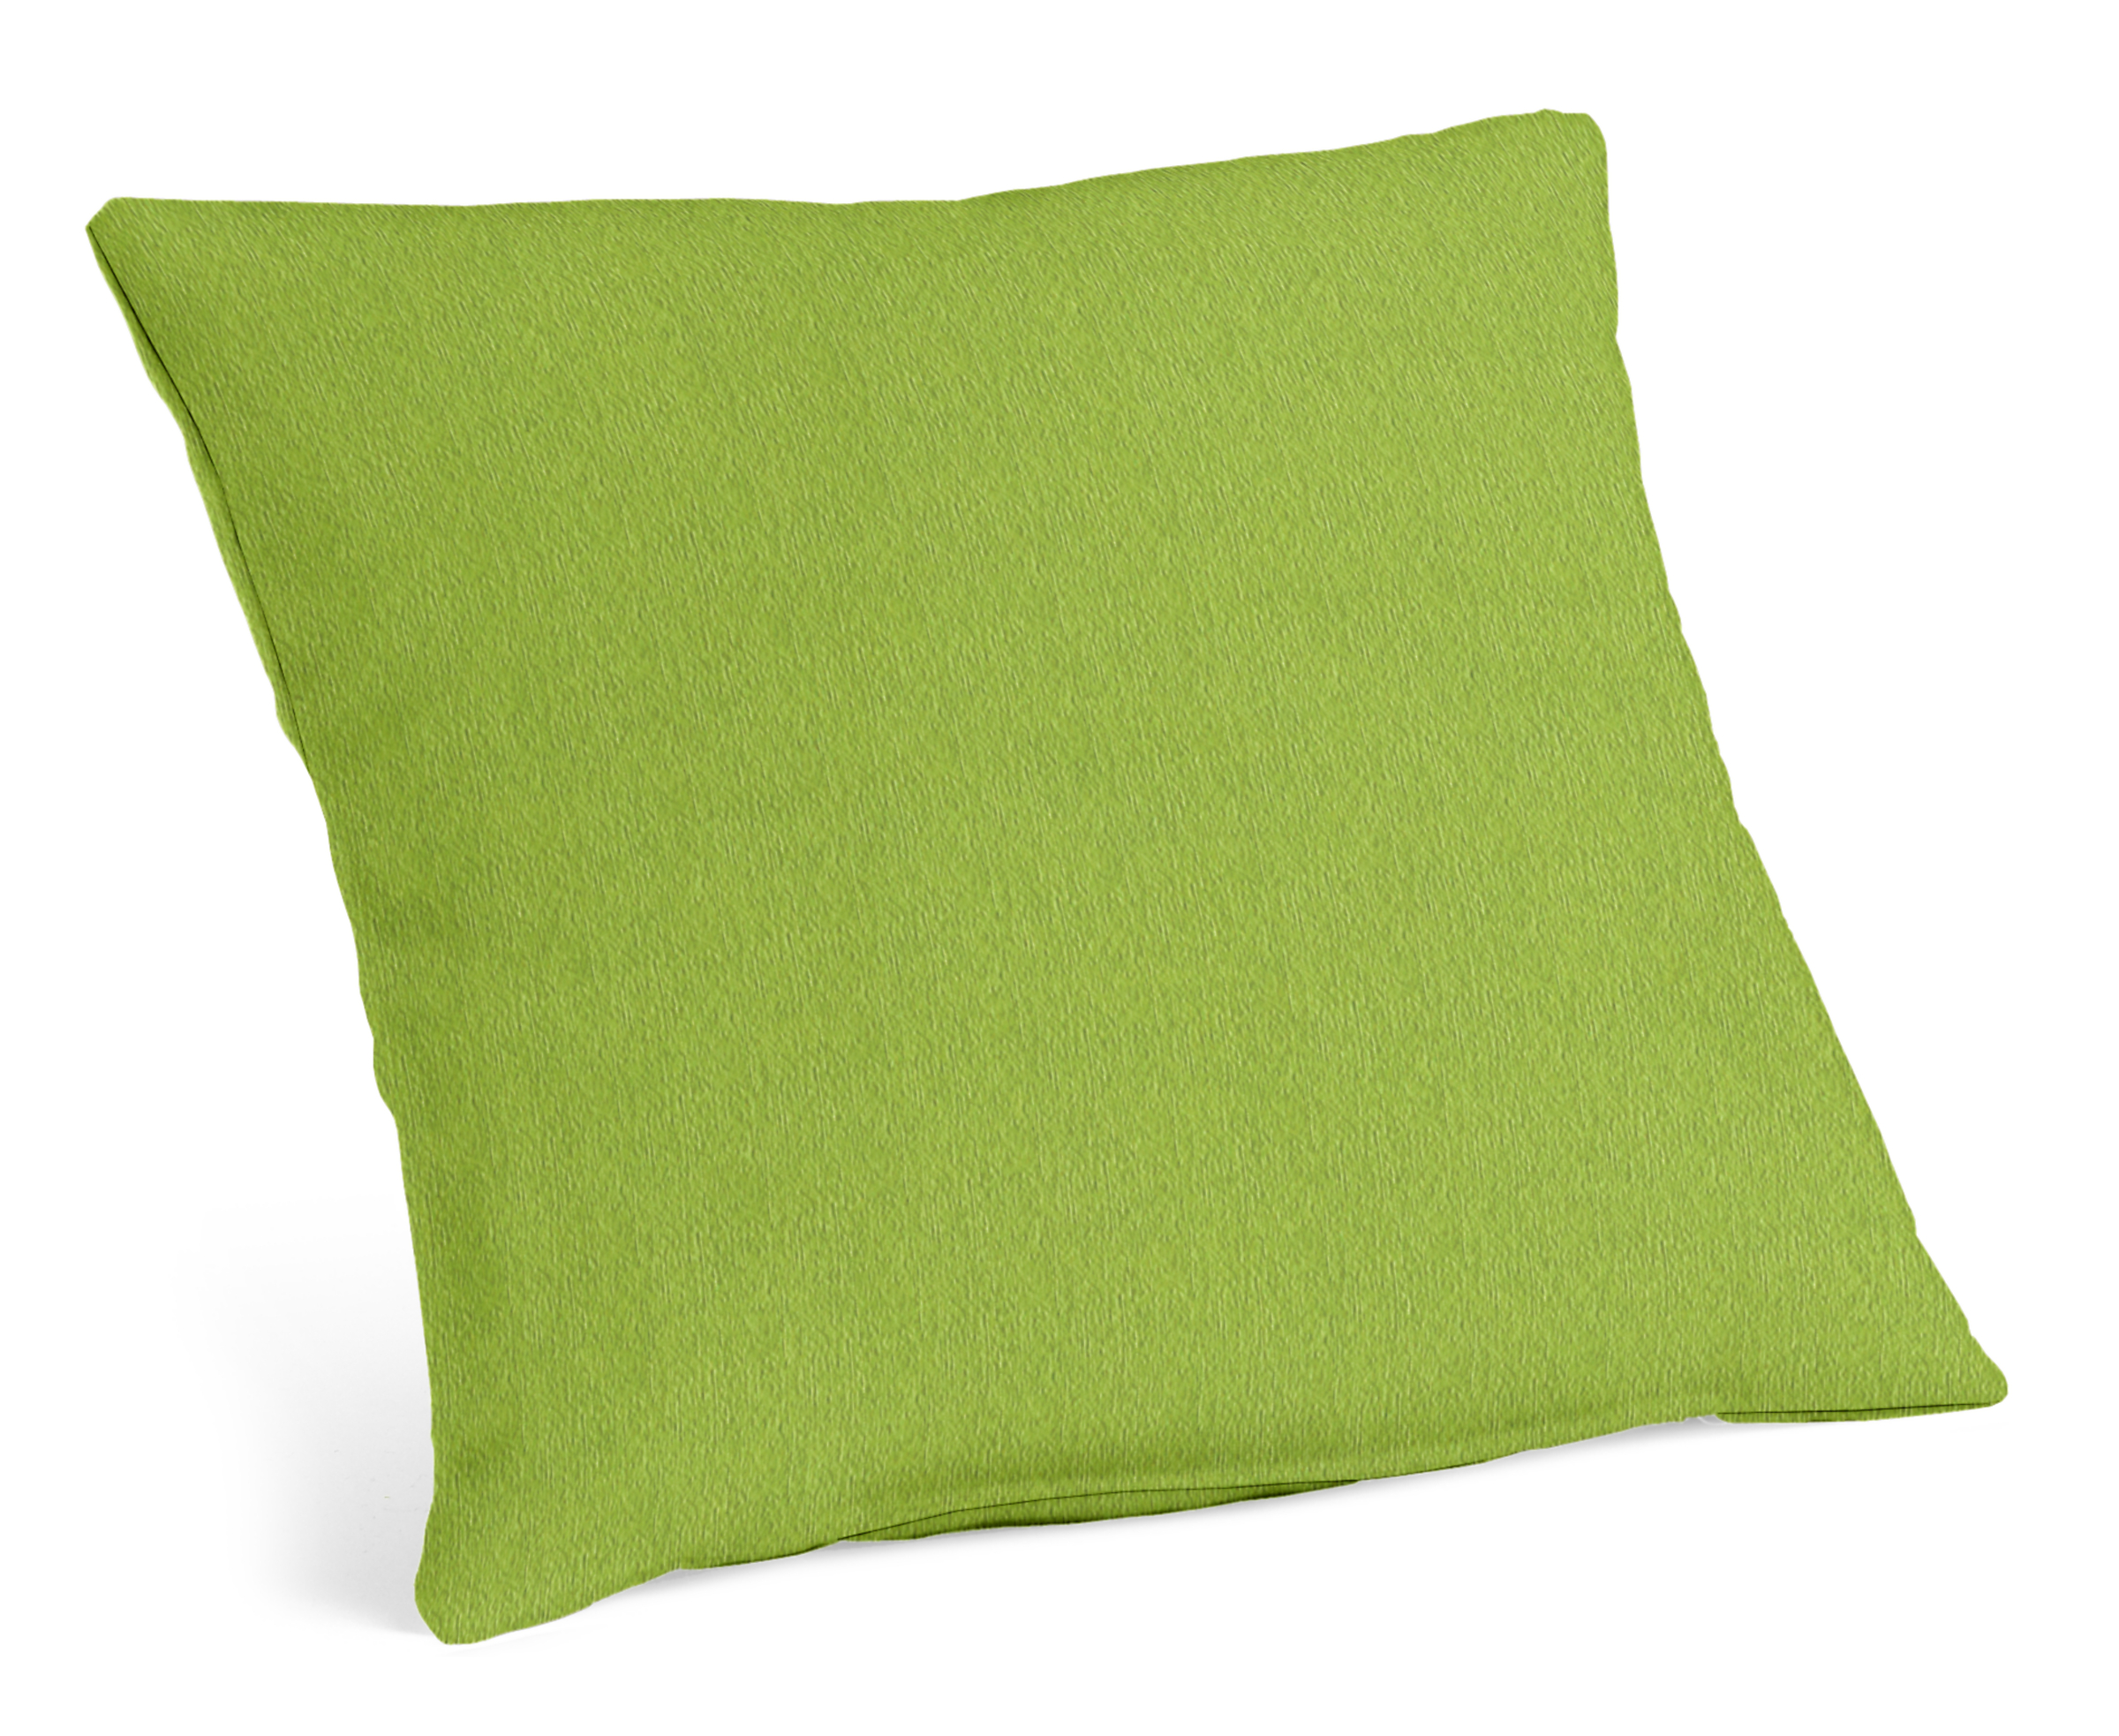 Hue 20w 20h Outdoor Pillow in Sunbrella Canvas Green